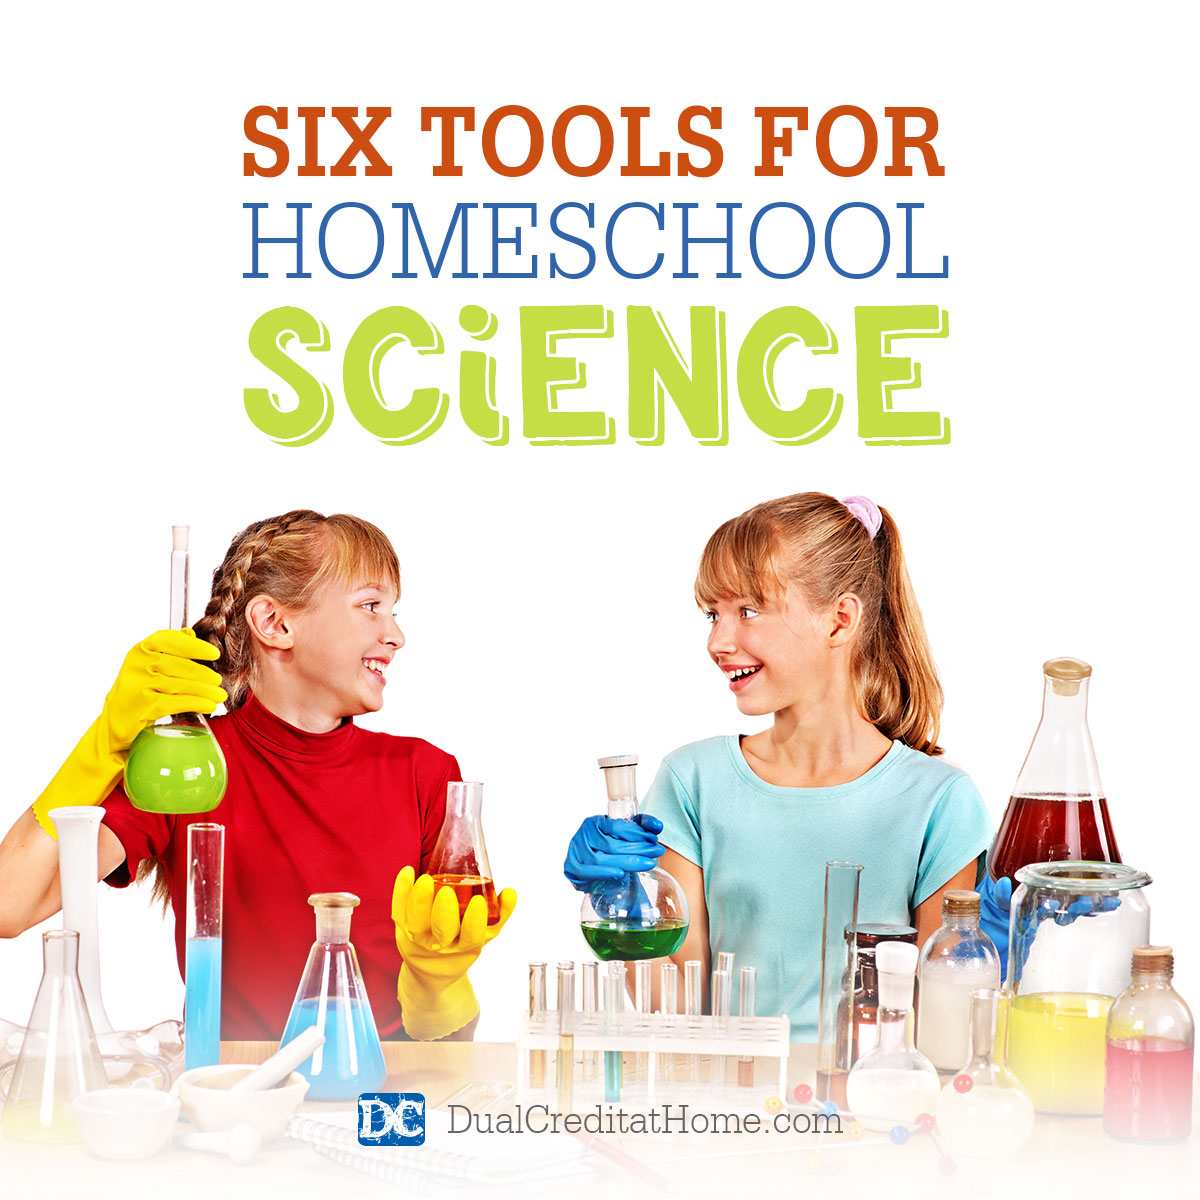 Six Tools for Homeschool Science